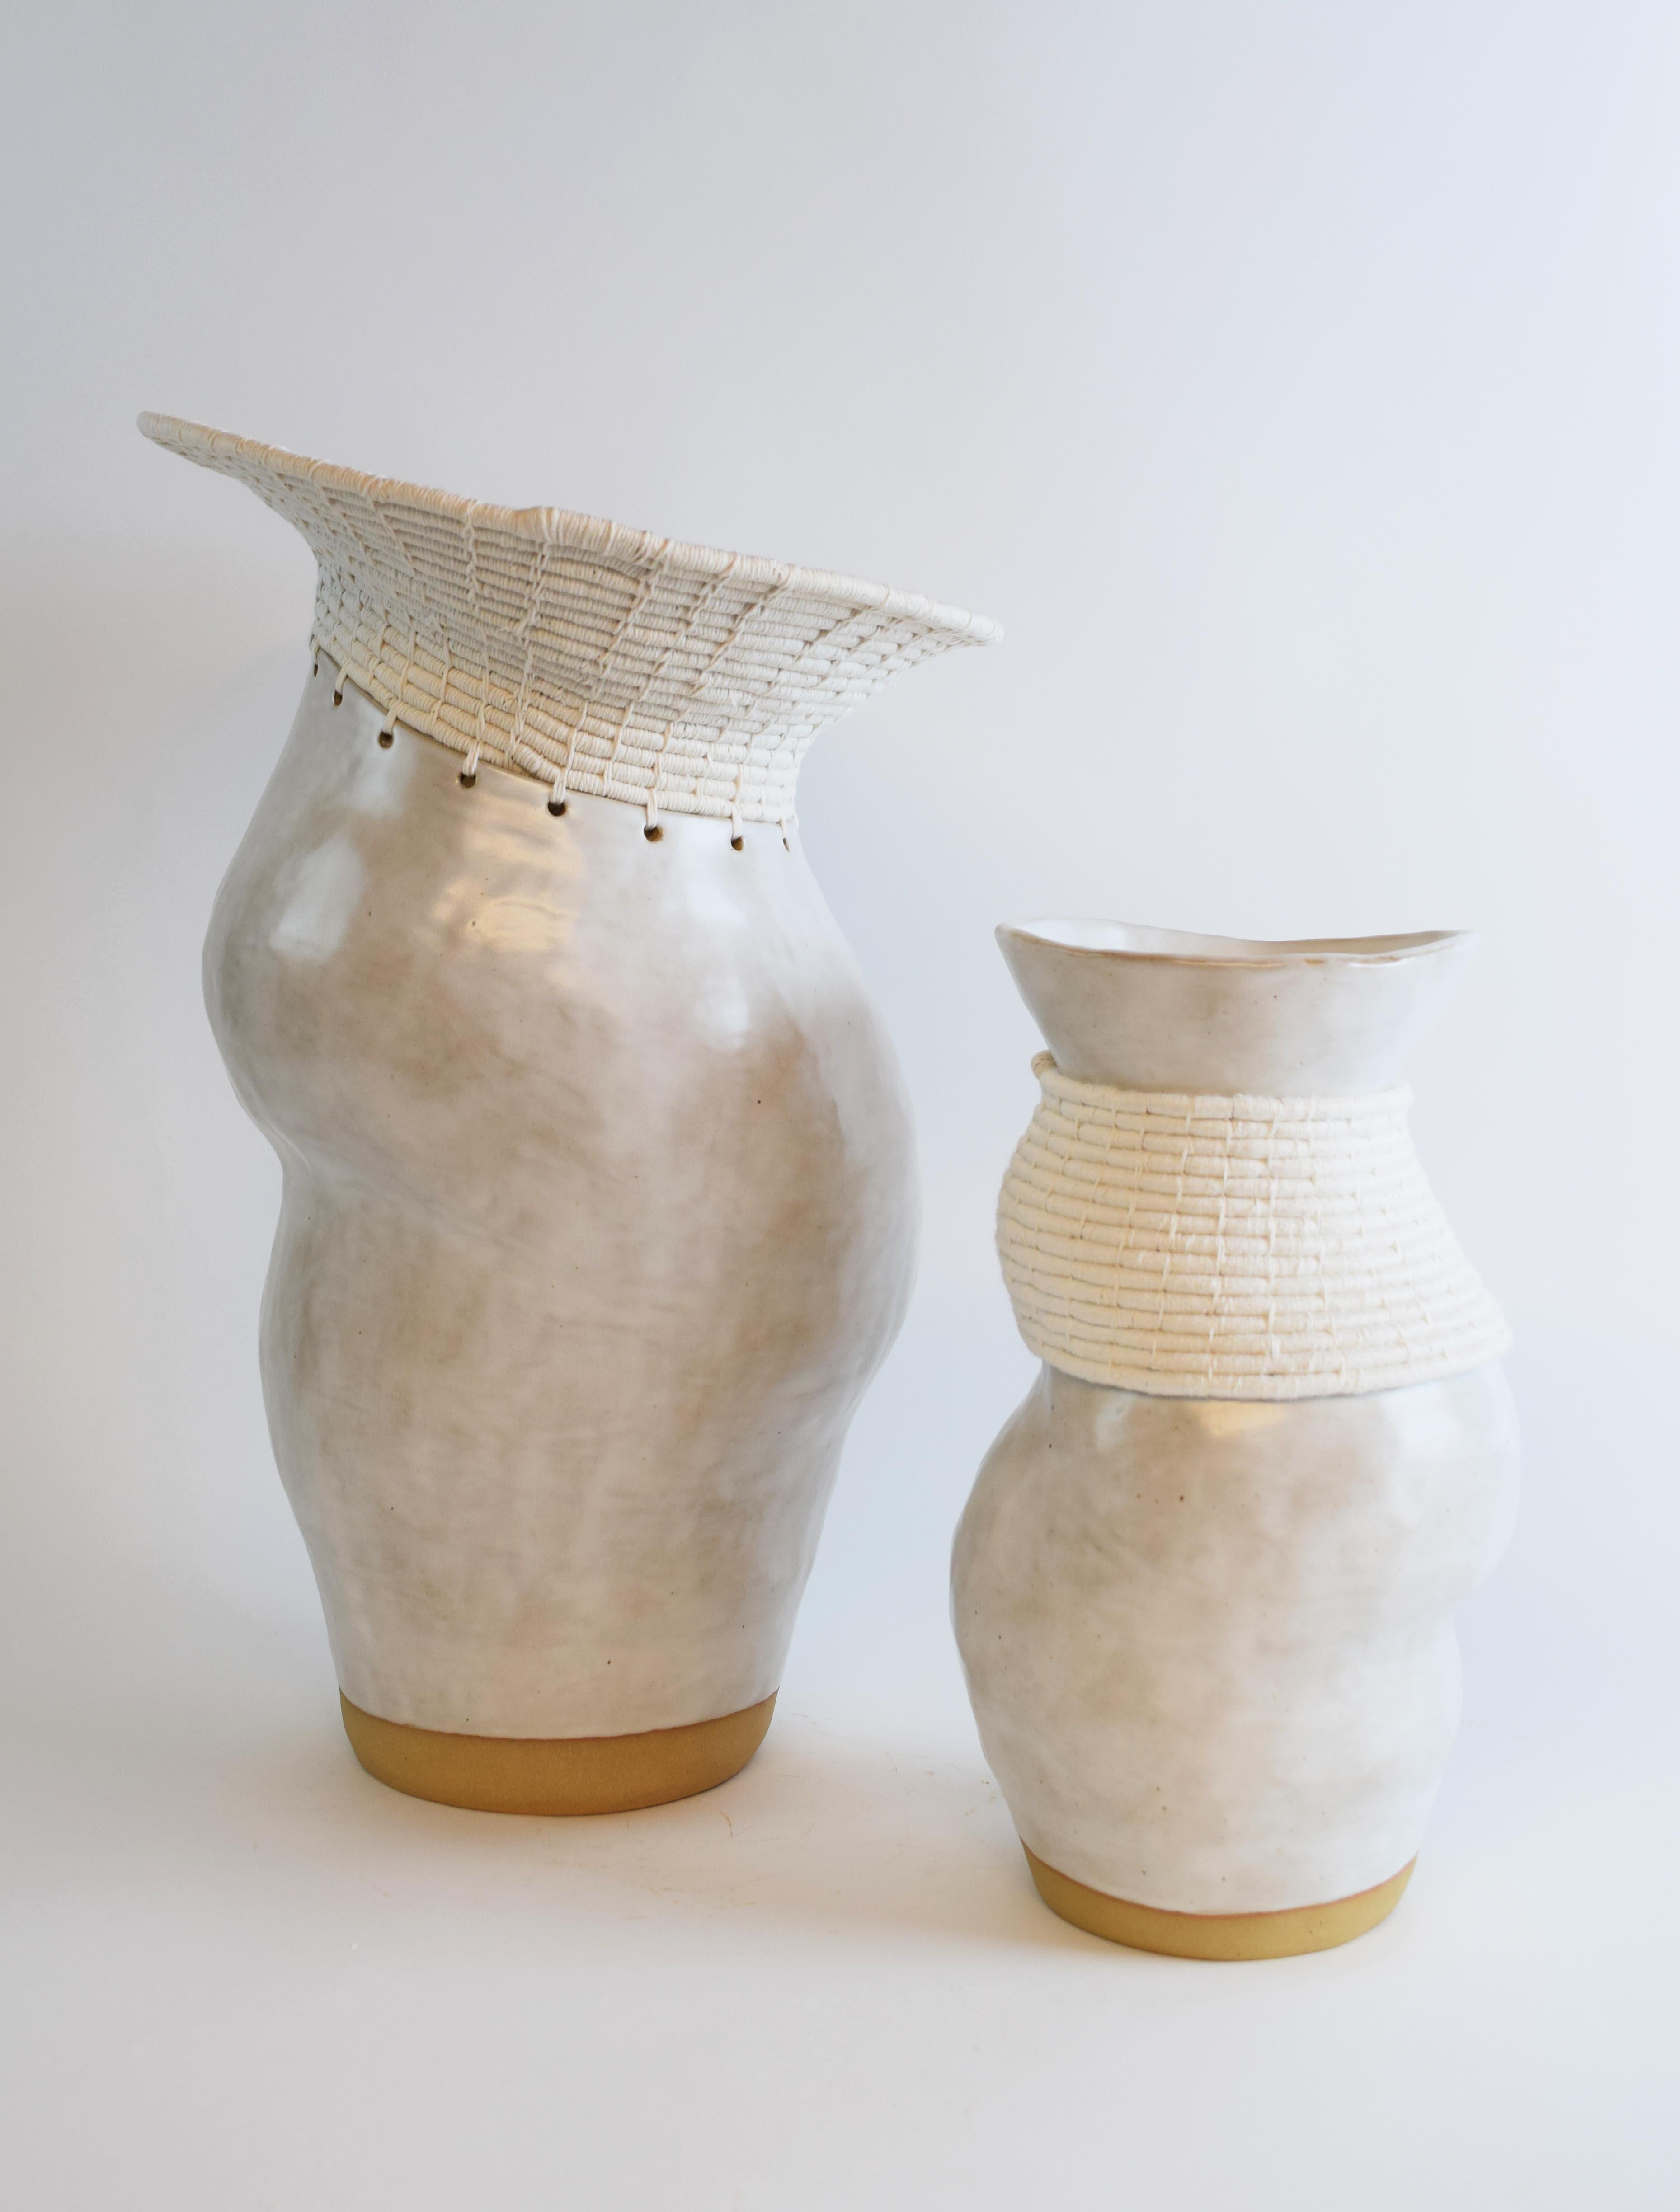 Contemporary One of a Kind Asymmetrical Ceramic Vase #775, White Glaze, Woven White Cotton